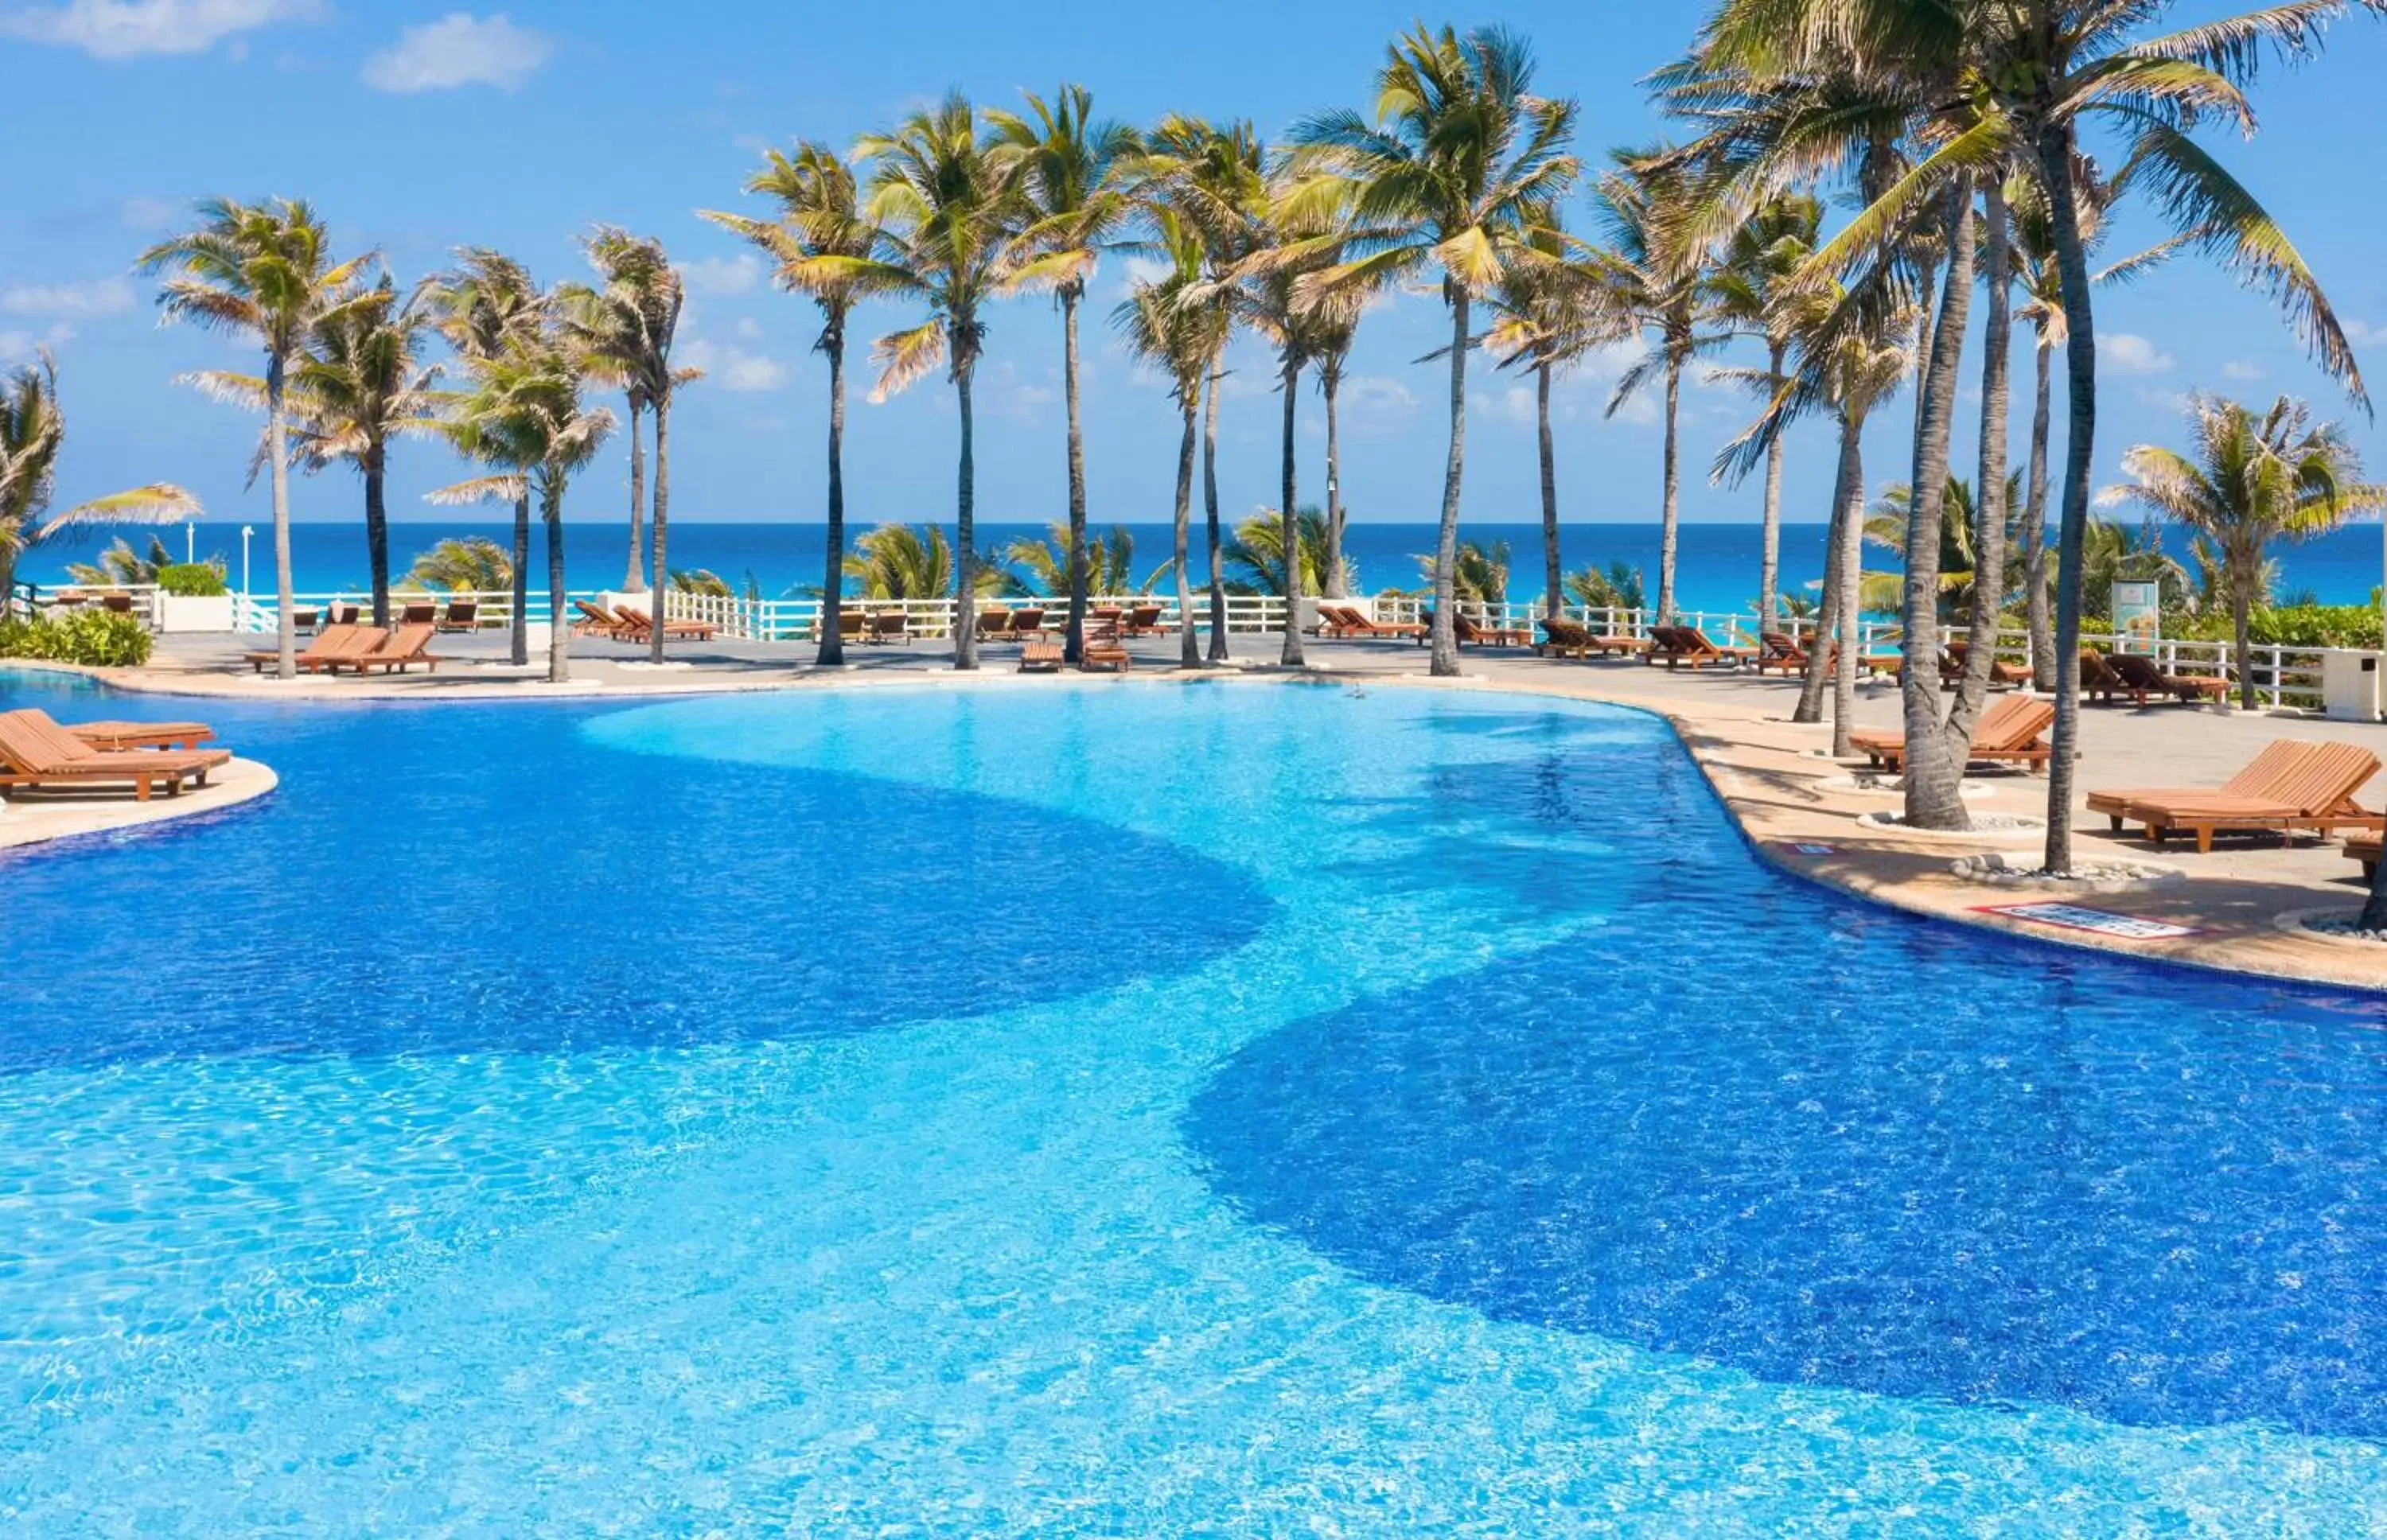 Swimming Pool in Grand Oasis Cancun - All Inclusive